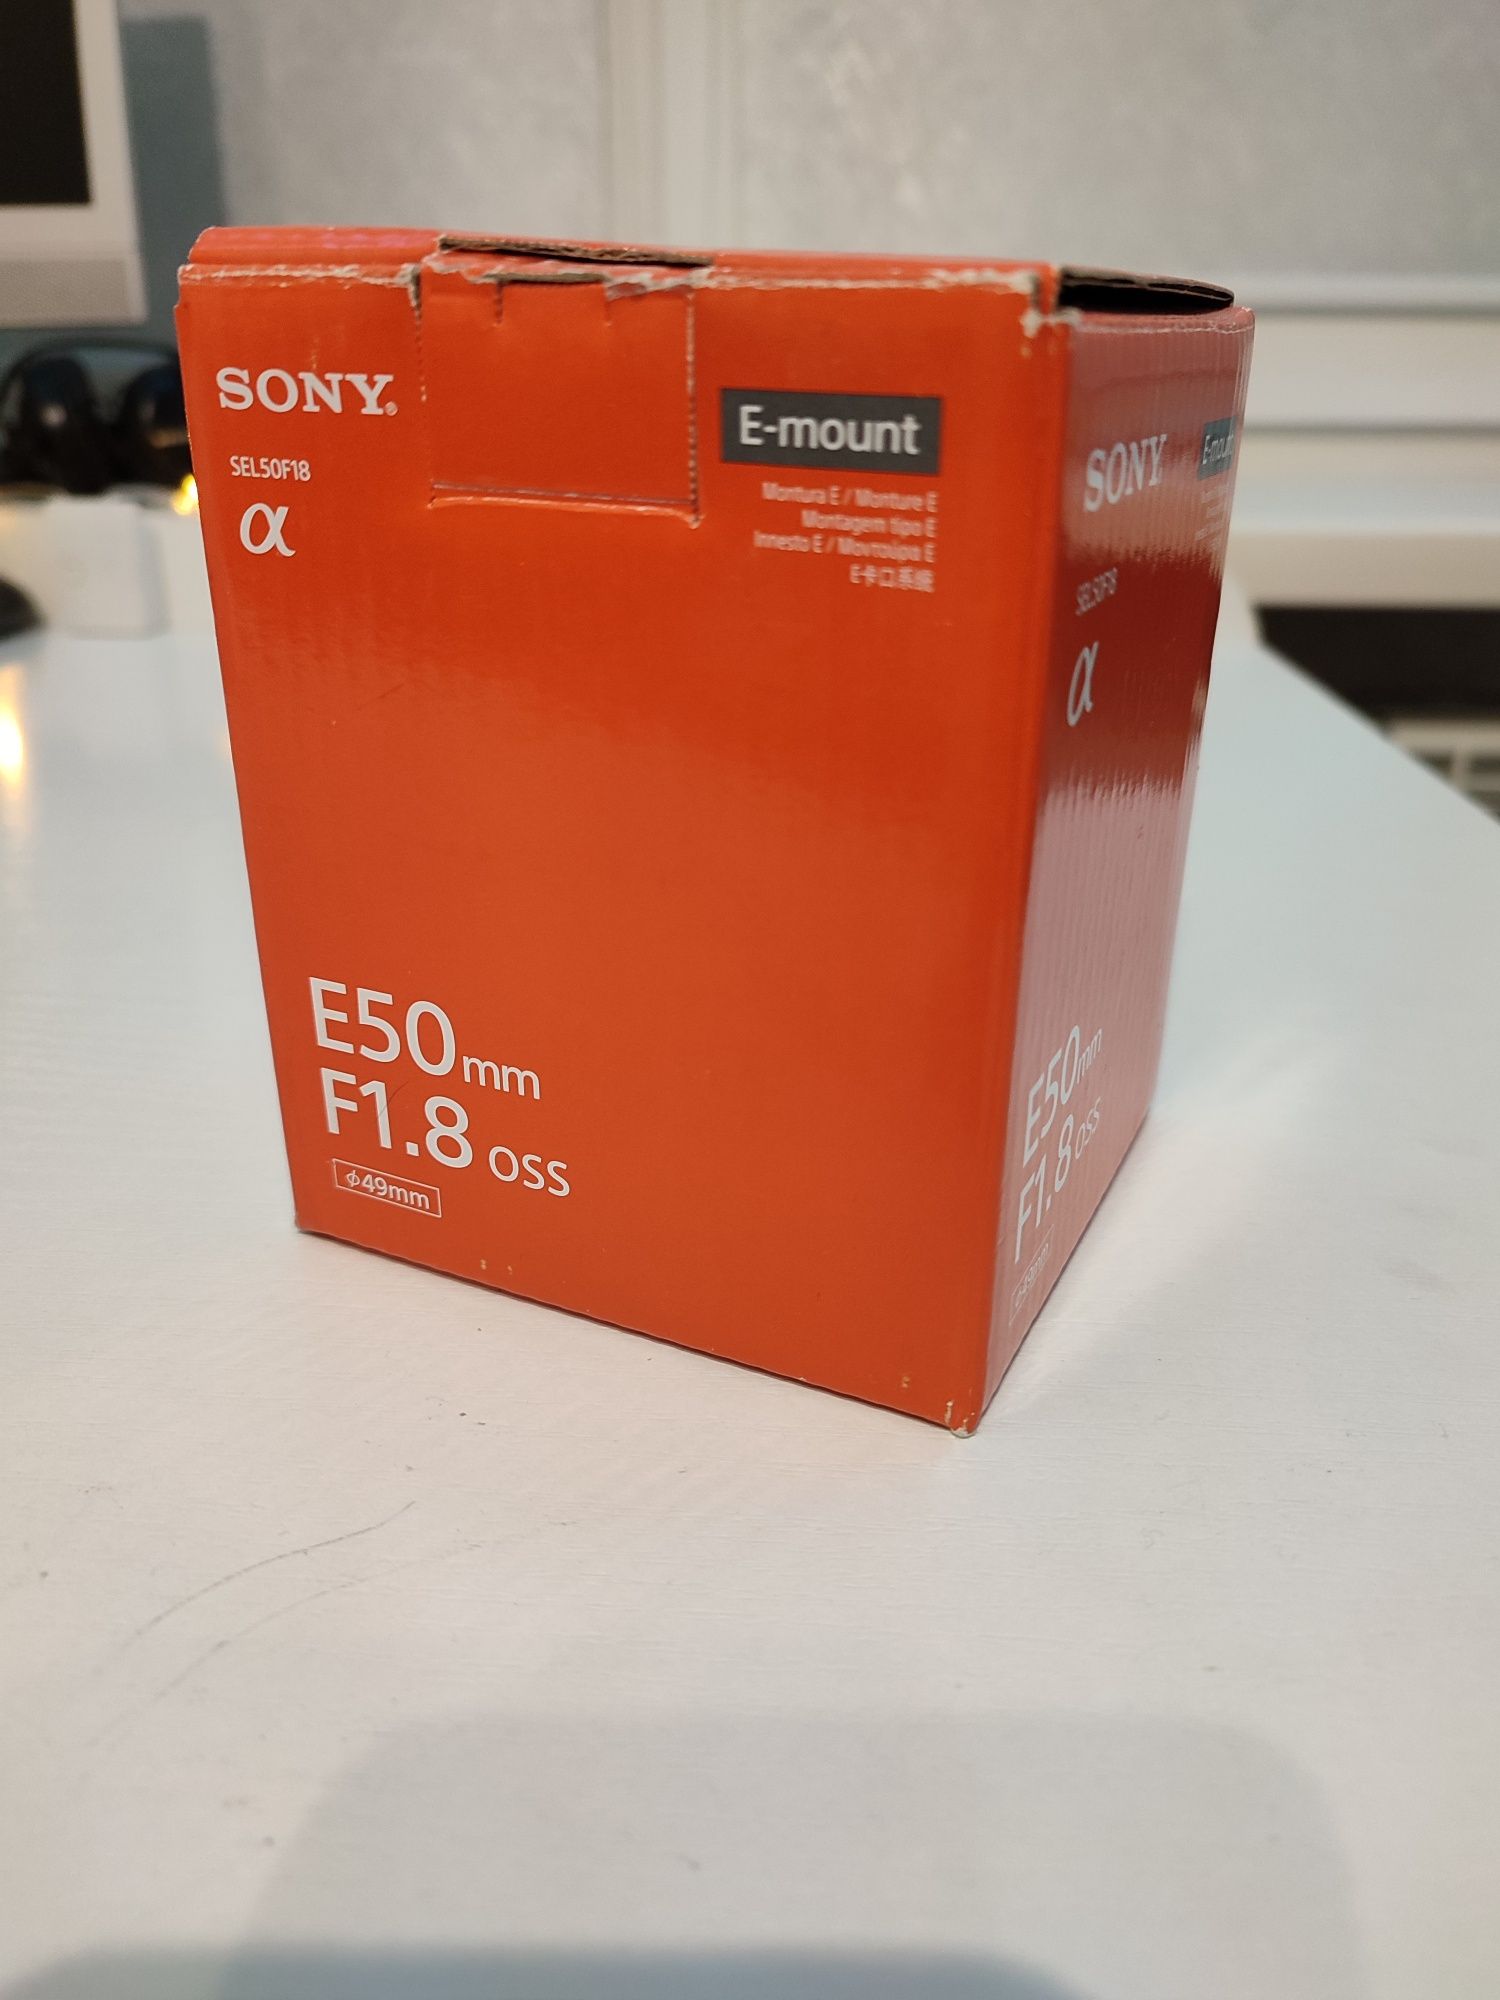 Об'єктив Sony E50 F 1.8 OSS